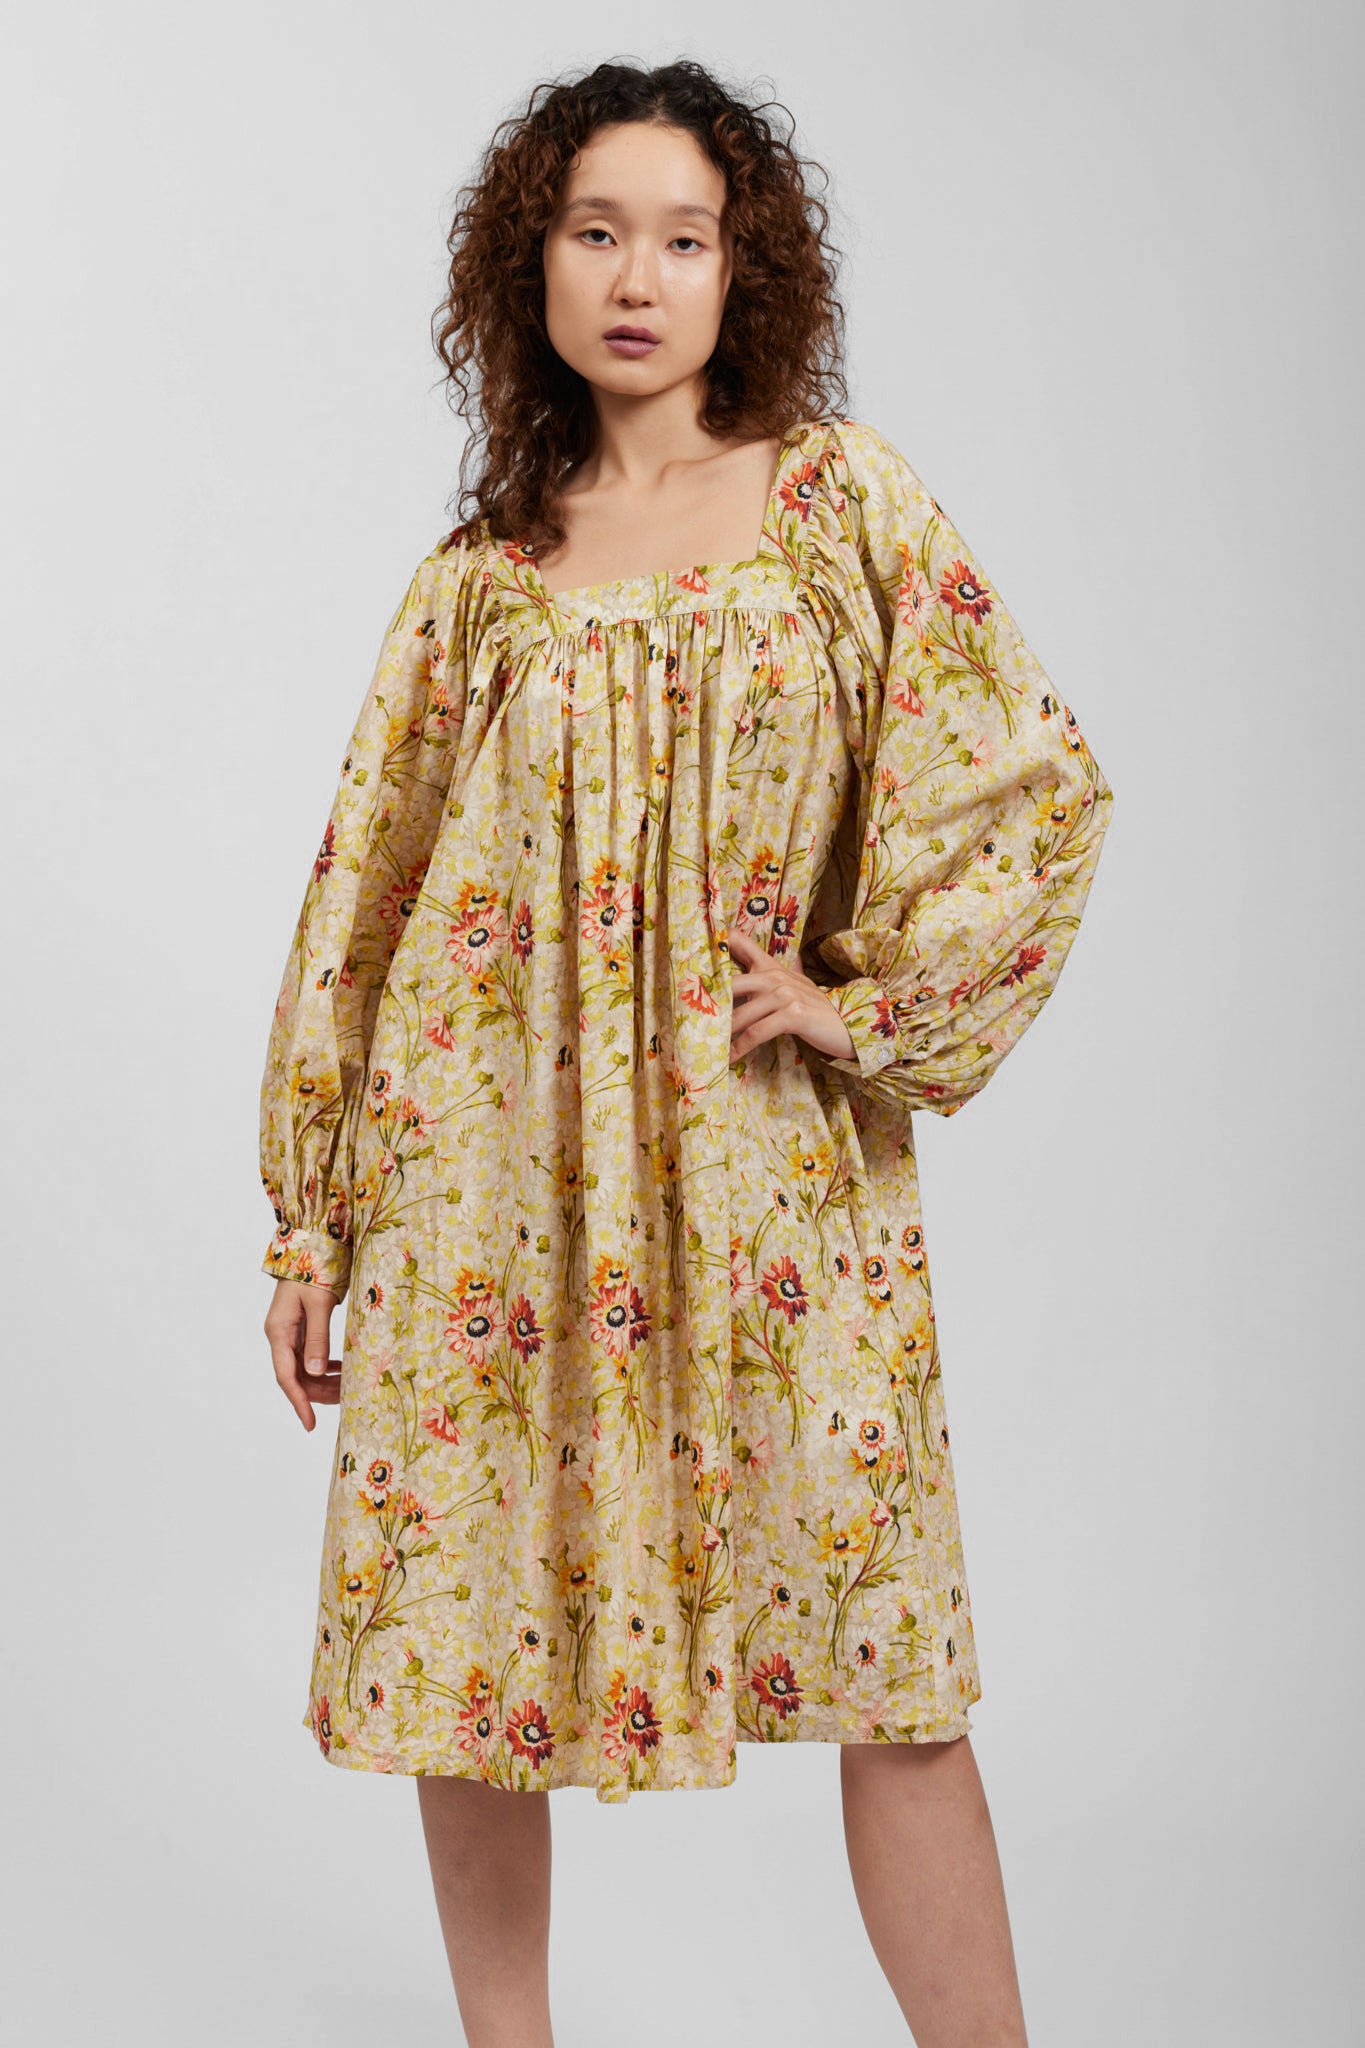 Beaumaris Dress in Witton Floral by Batsheva x Laura Ashley